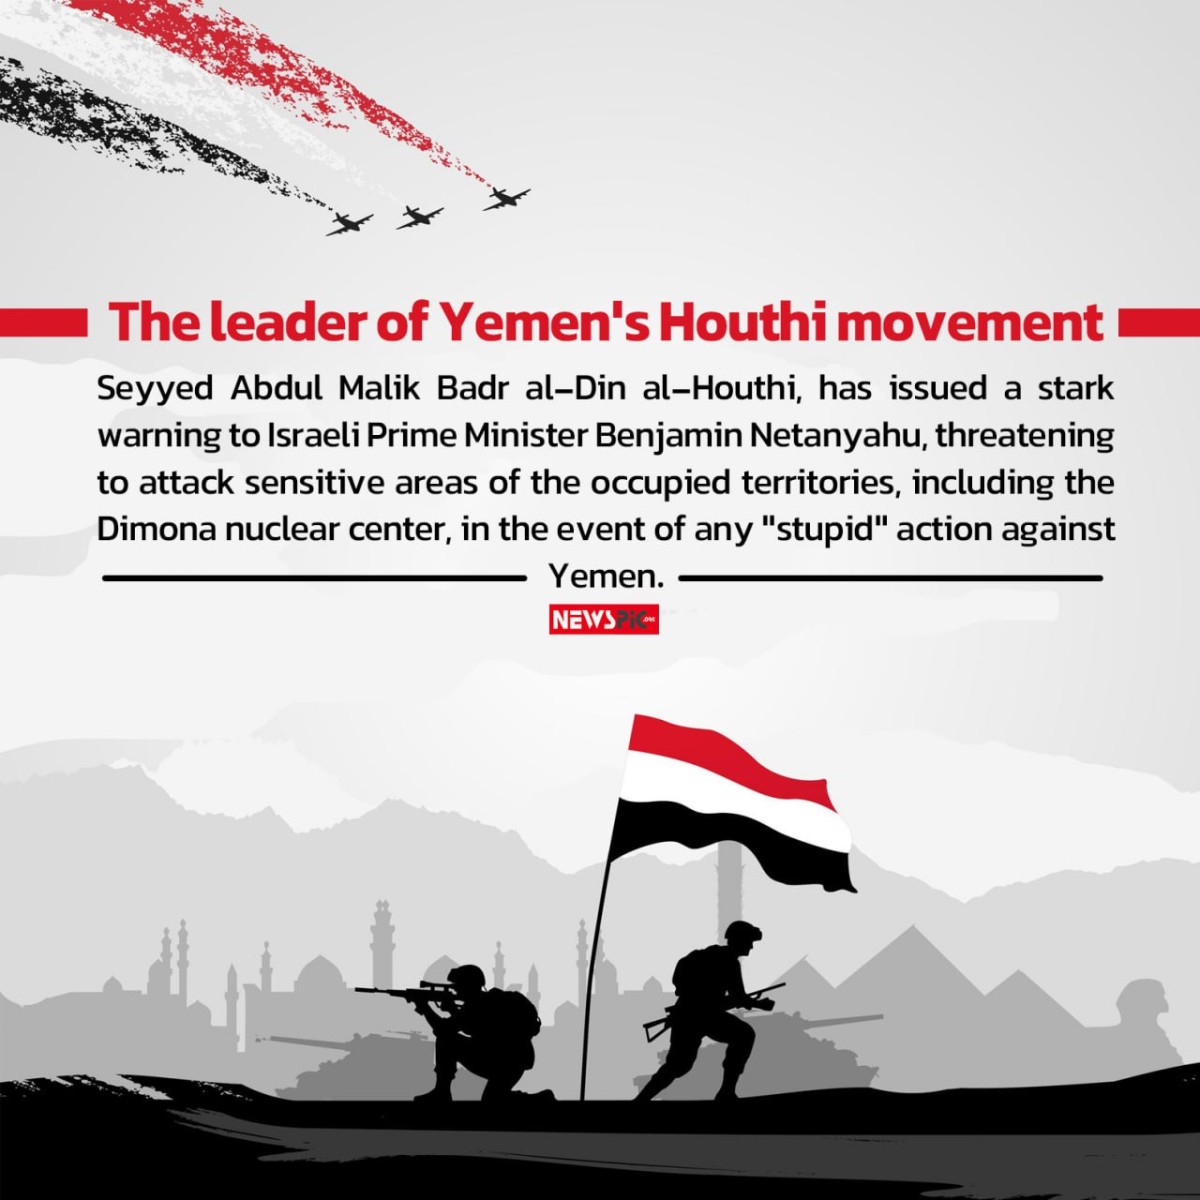 The leader of Yemen's Houthi movement